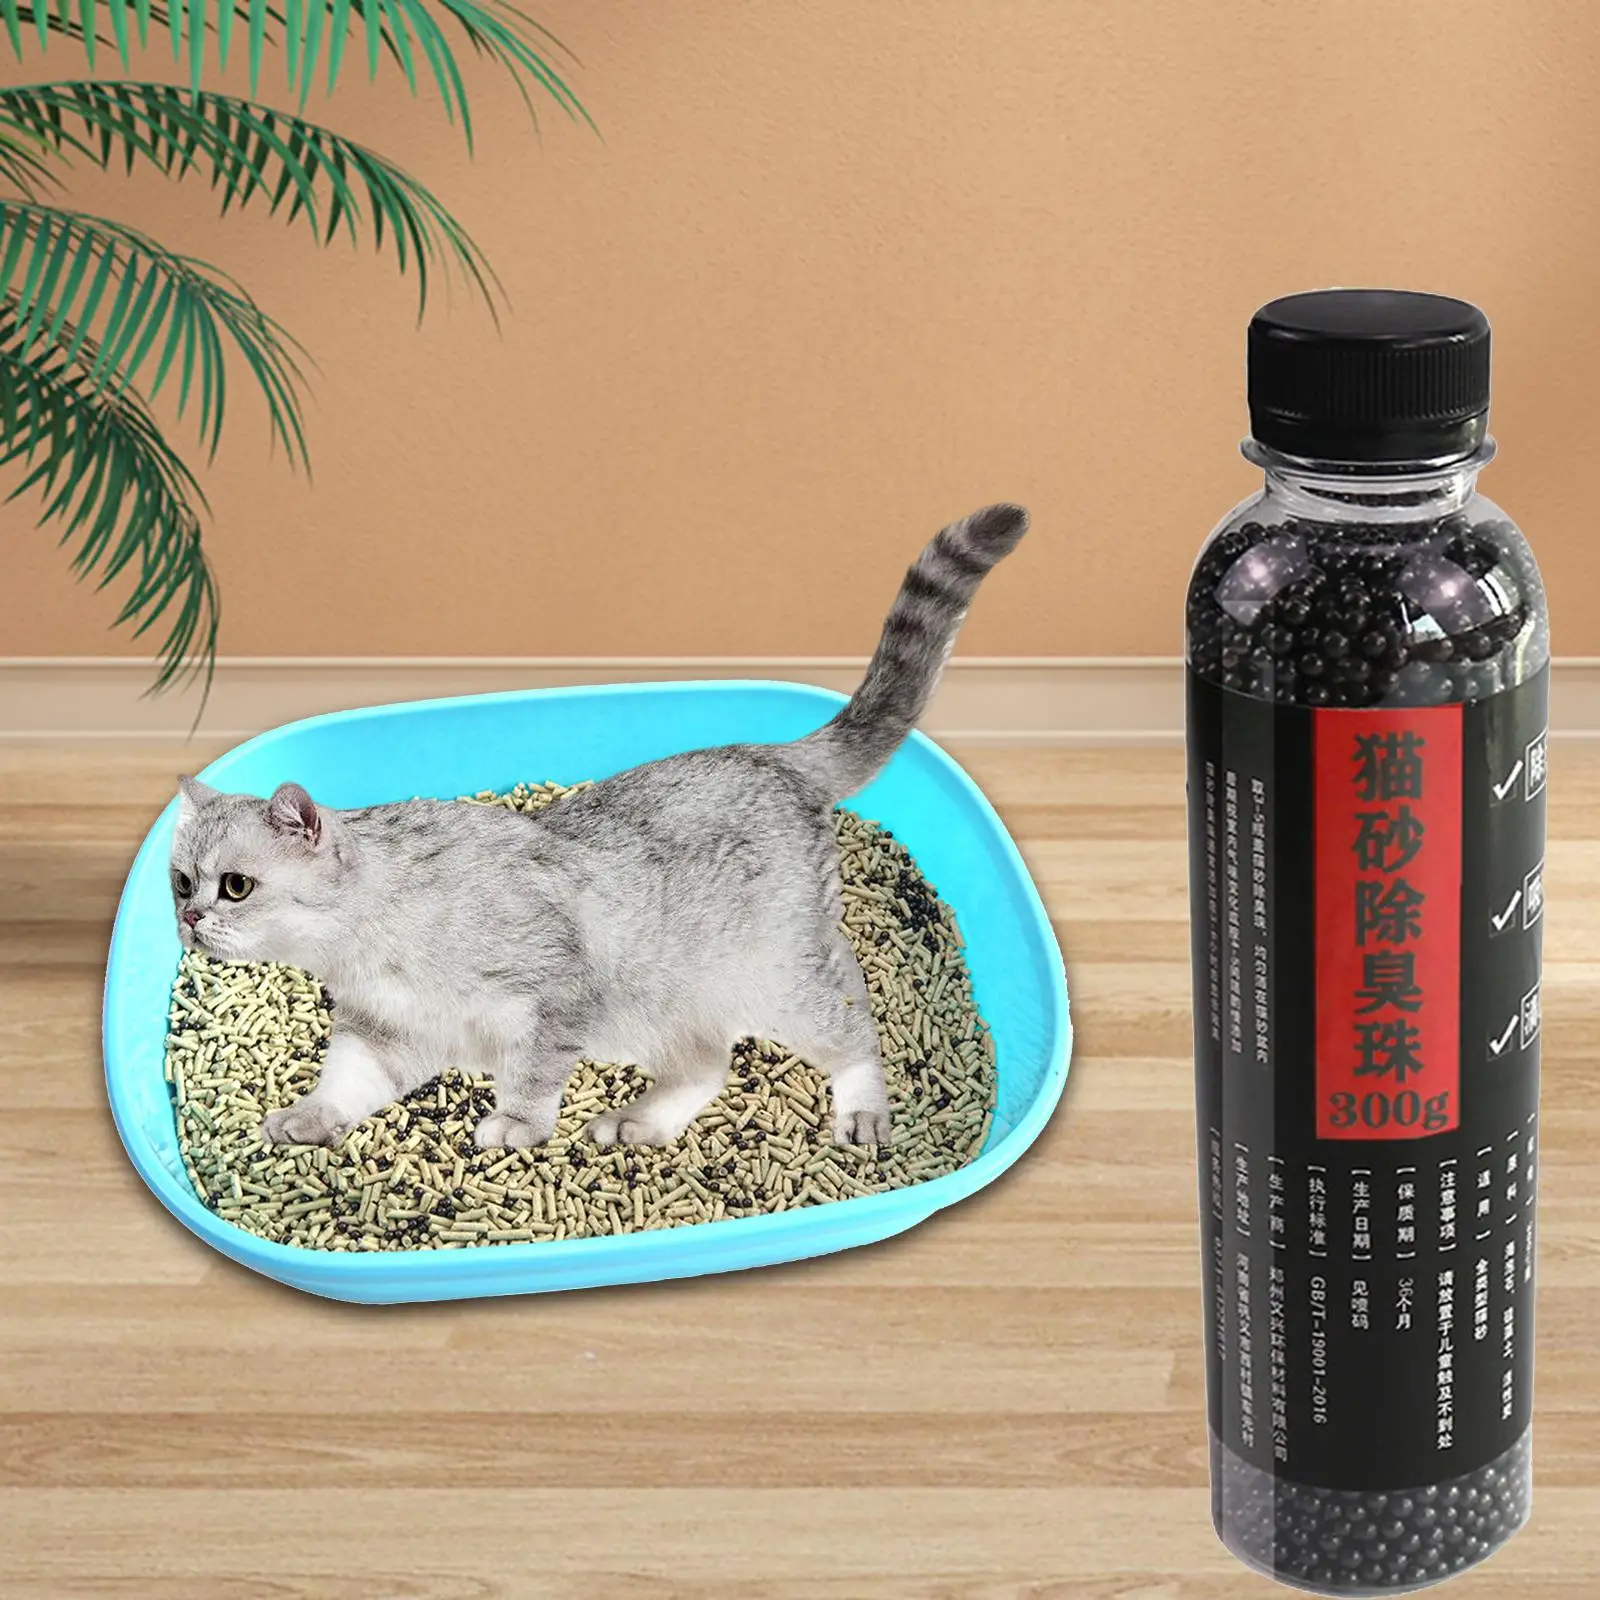 Cat Litter Box Odor Eliminate 300g Cat Litter Deodorizer for Pet Litter Box